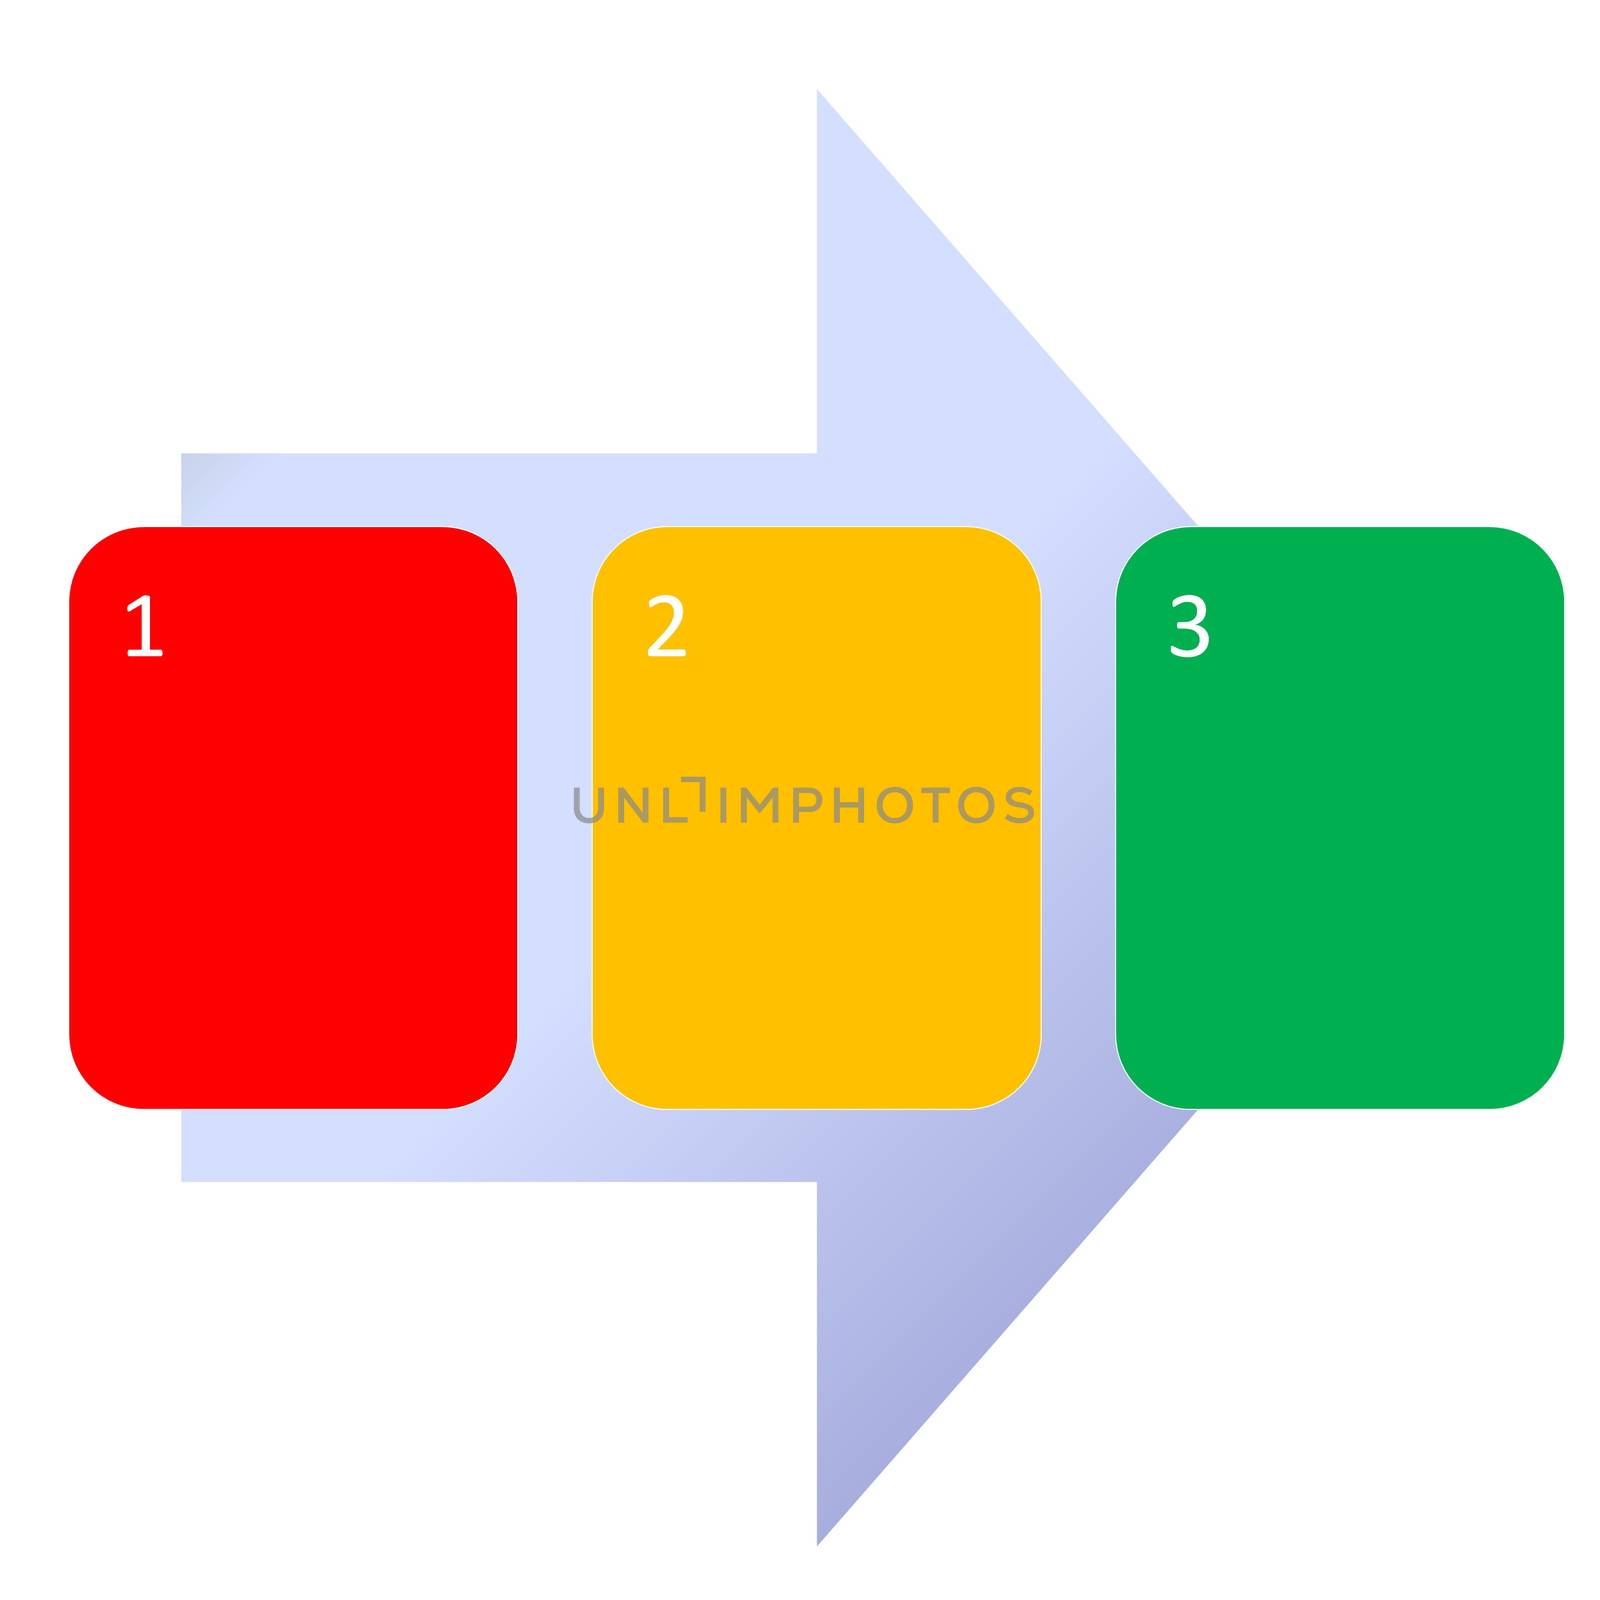 Sequential step diagram by Elenaphotos21